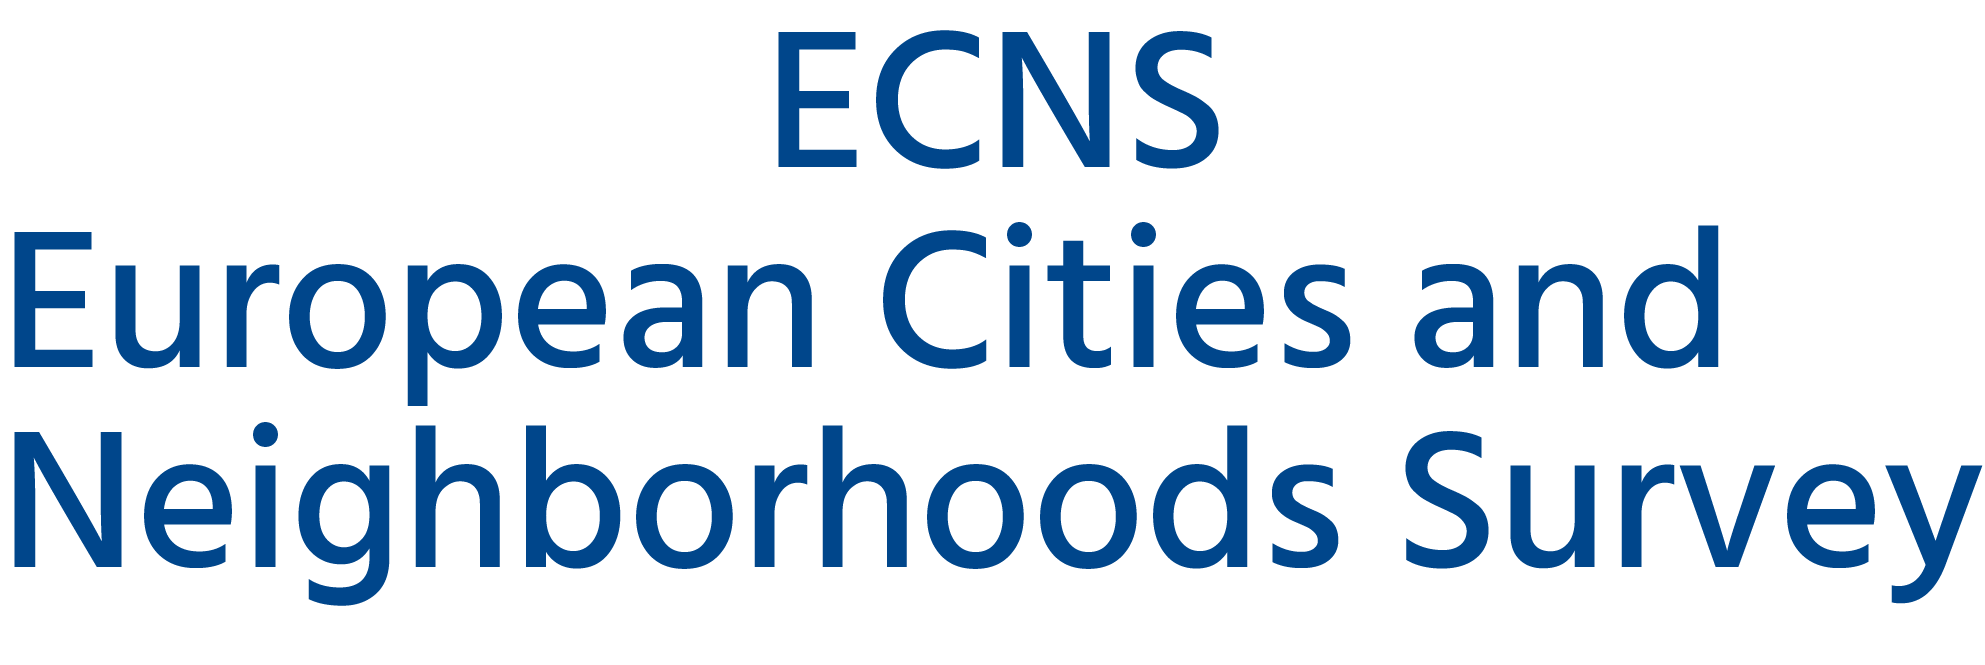 European Cities and Neighborhoods Survey - UC Santa Barbara